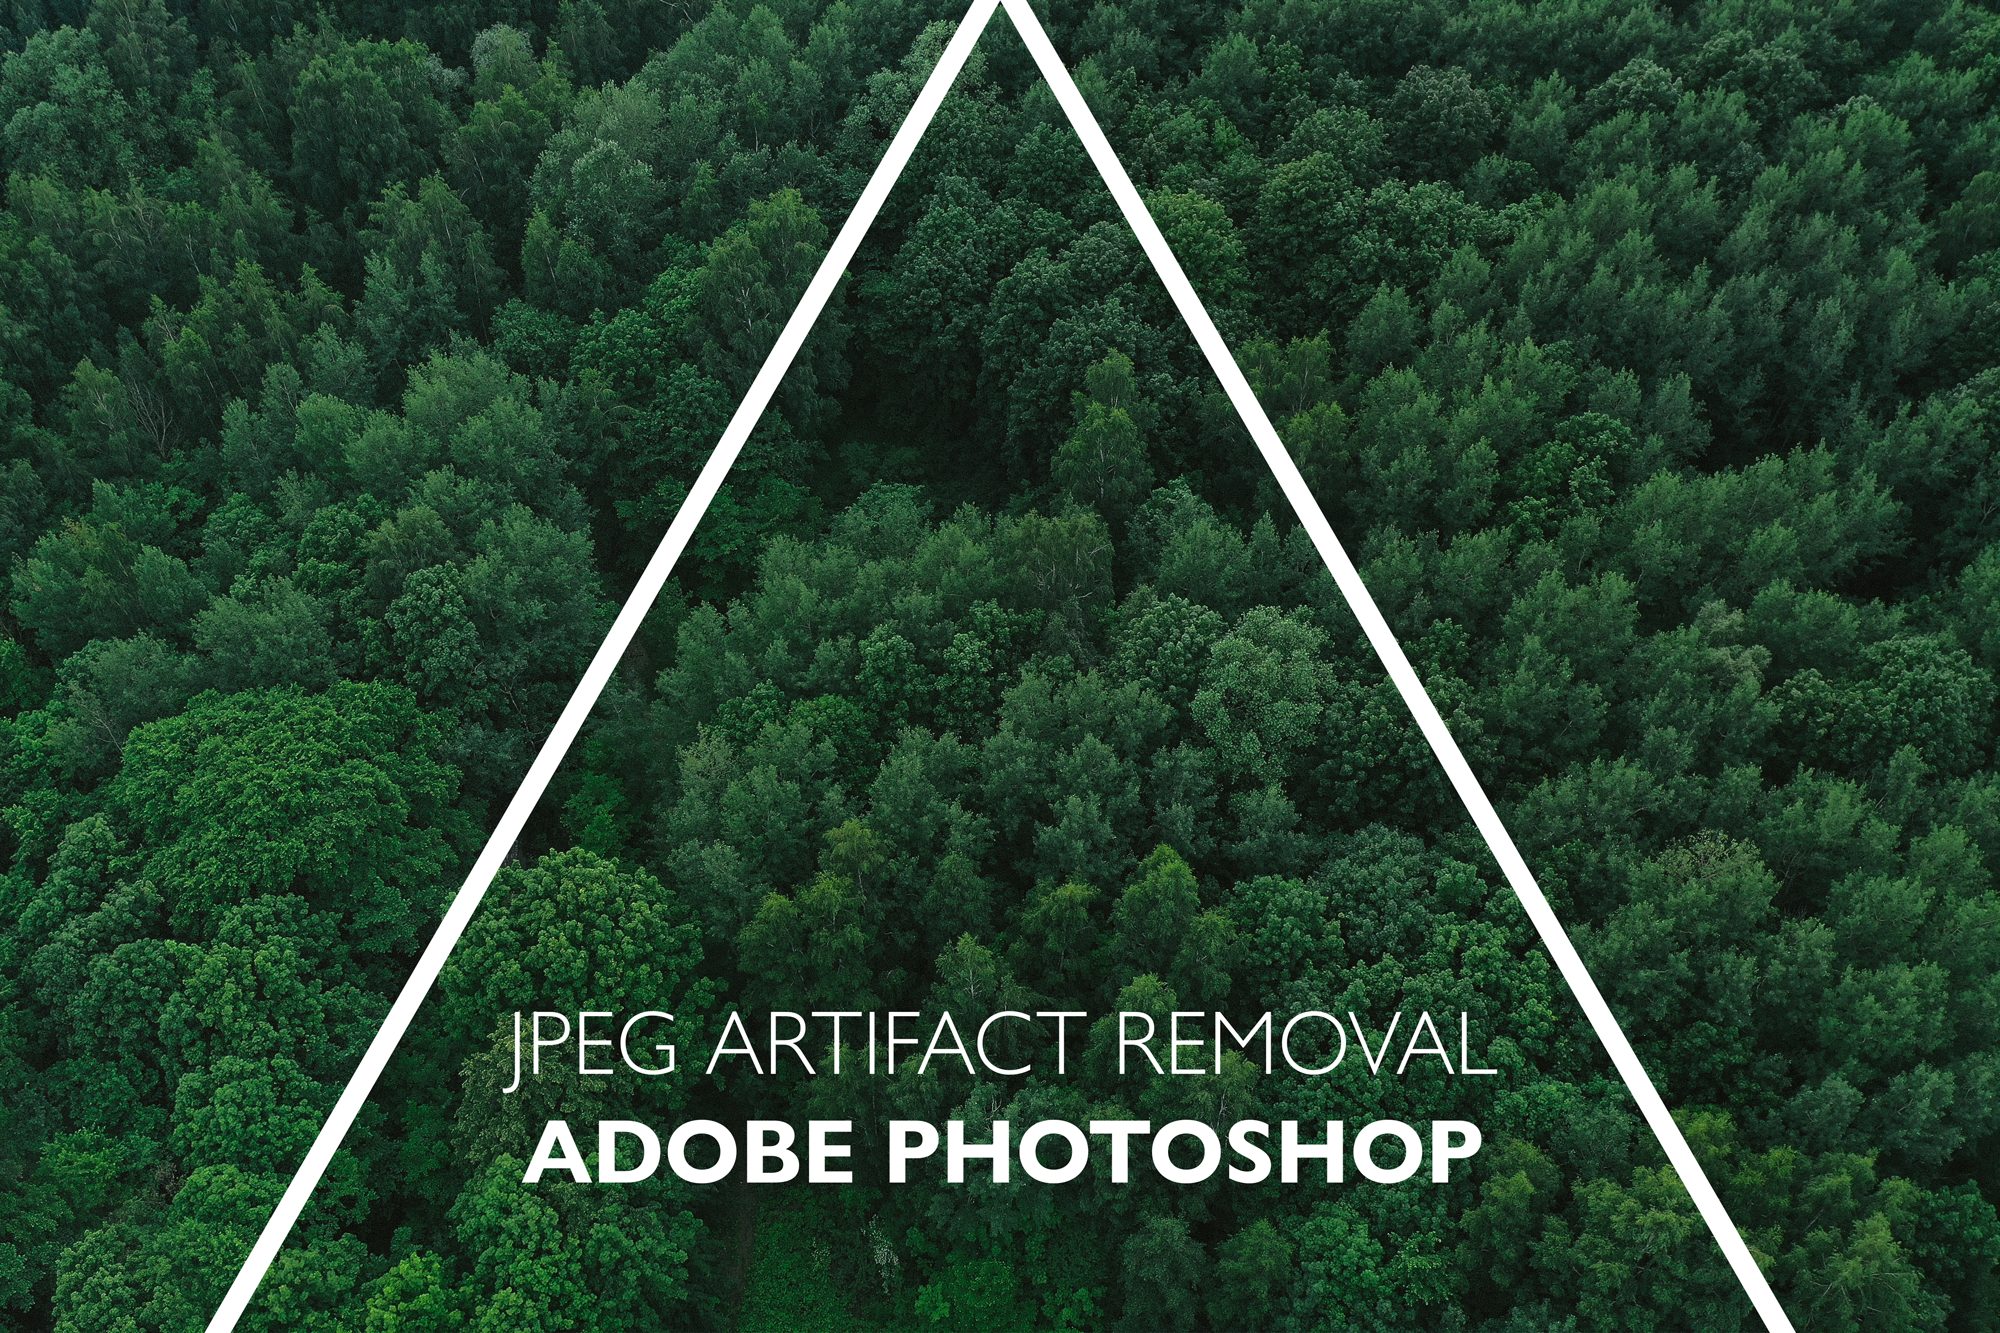 jpeg artifact removal photoshop download